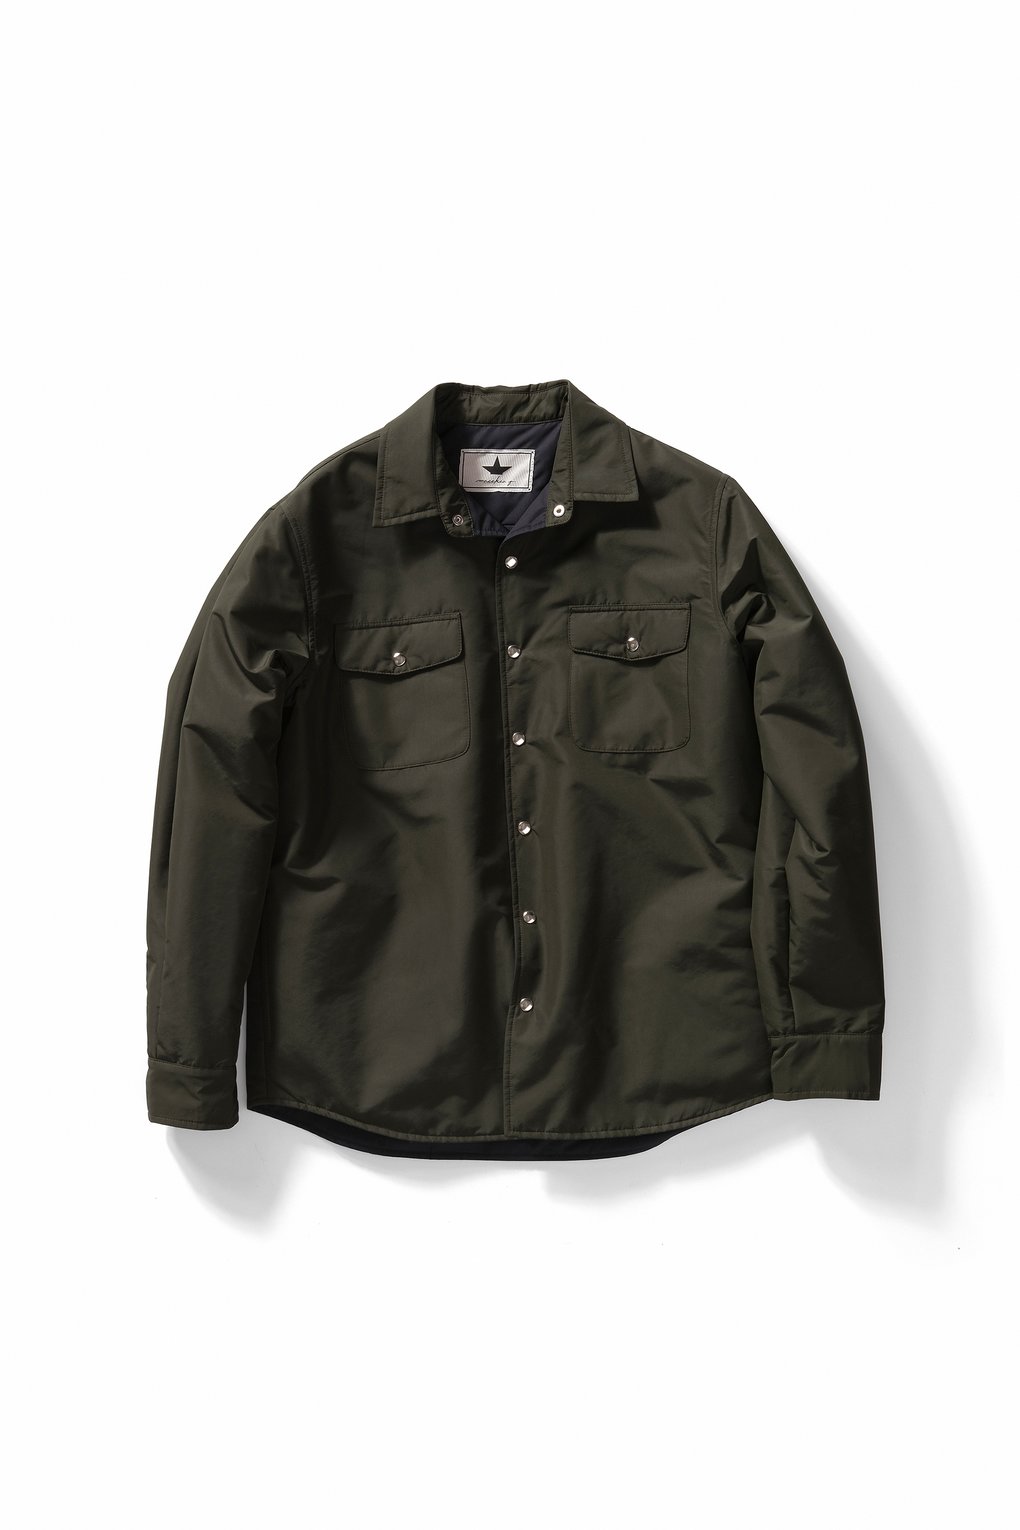 Jacket-Shirt Man - JM2076TPAYA - Army Green